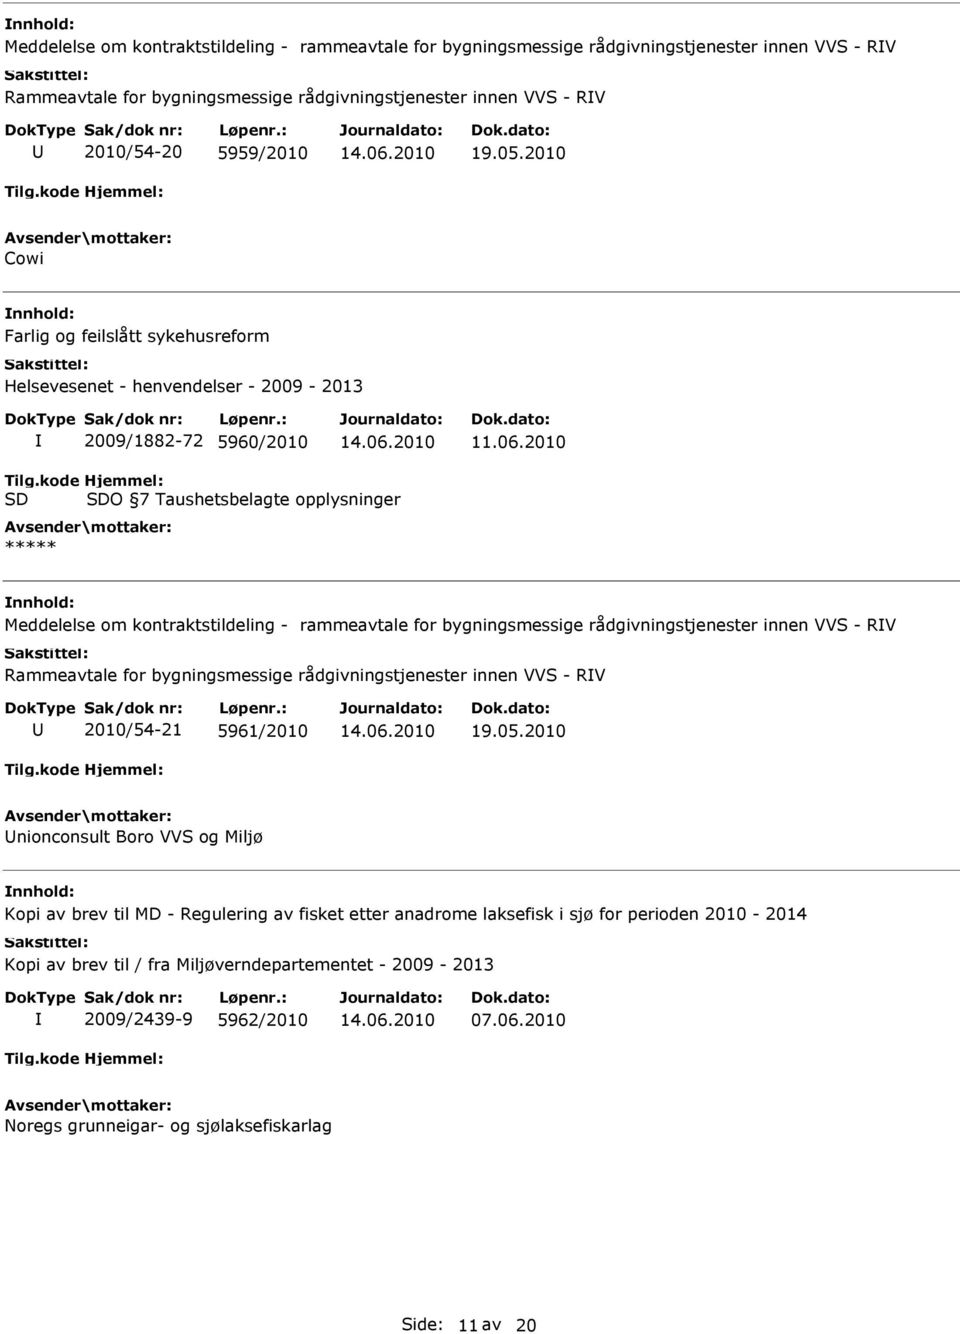 bygningsmessige rådgivningstjenester innen VVS - RV Rammeavtale for bygningsmessige rådgivningstjenester innen VVS - RV 2010/54-21 5961/2010 19.05.